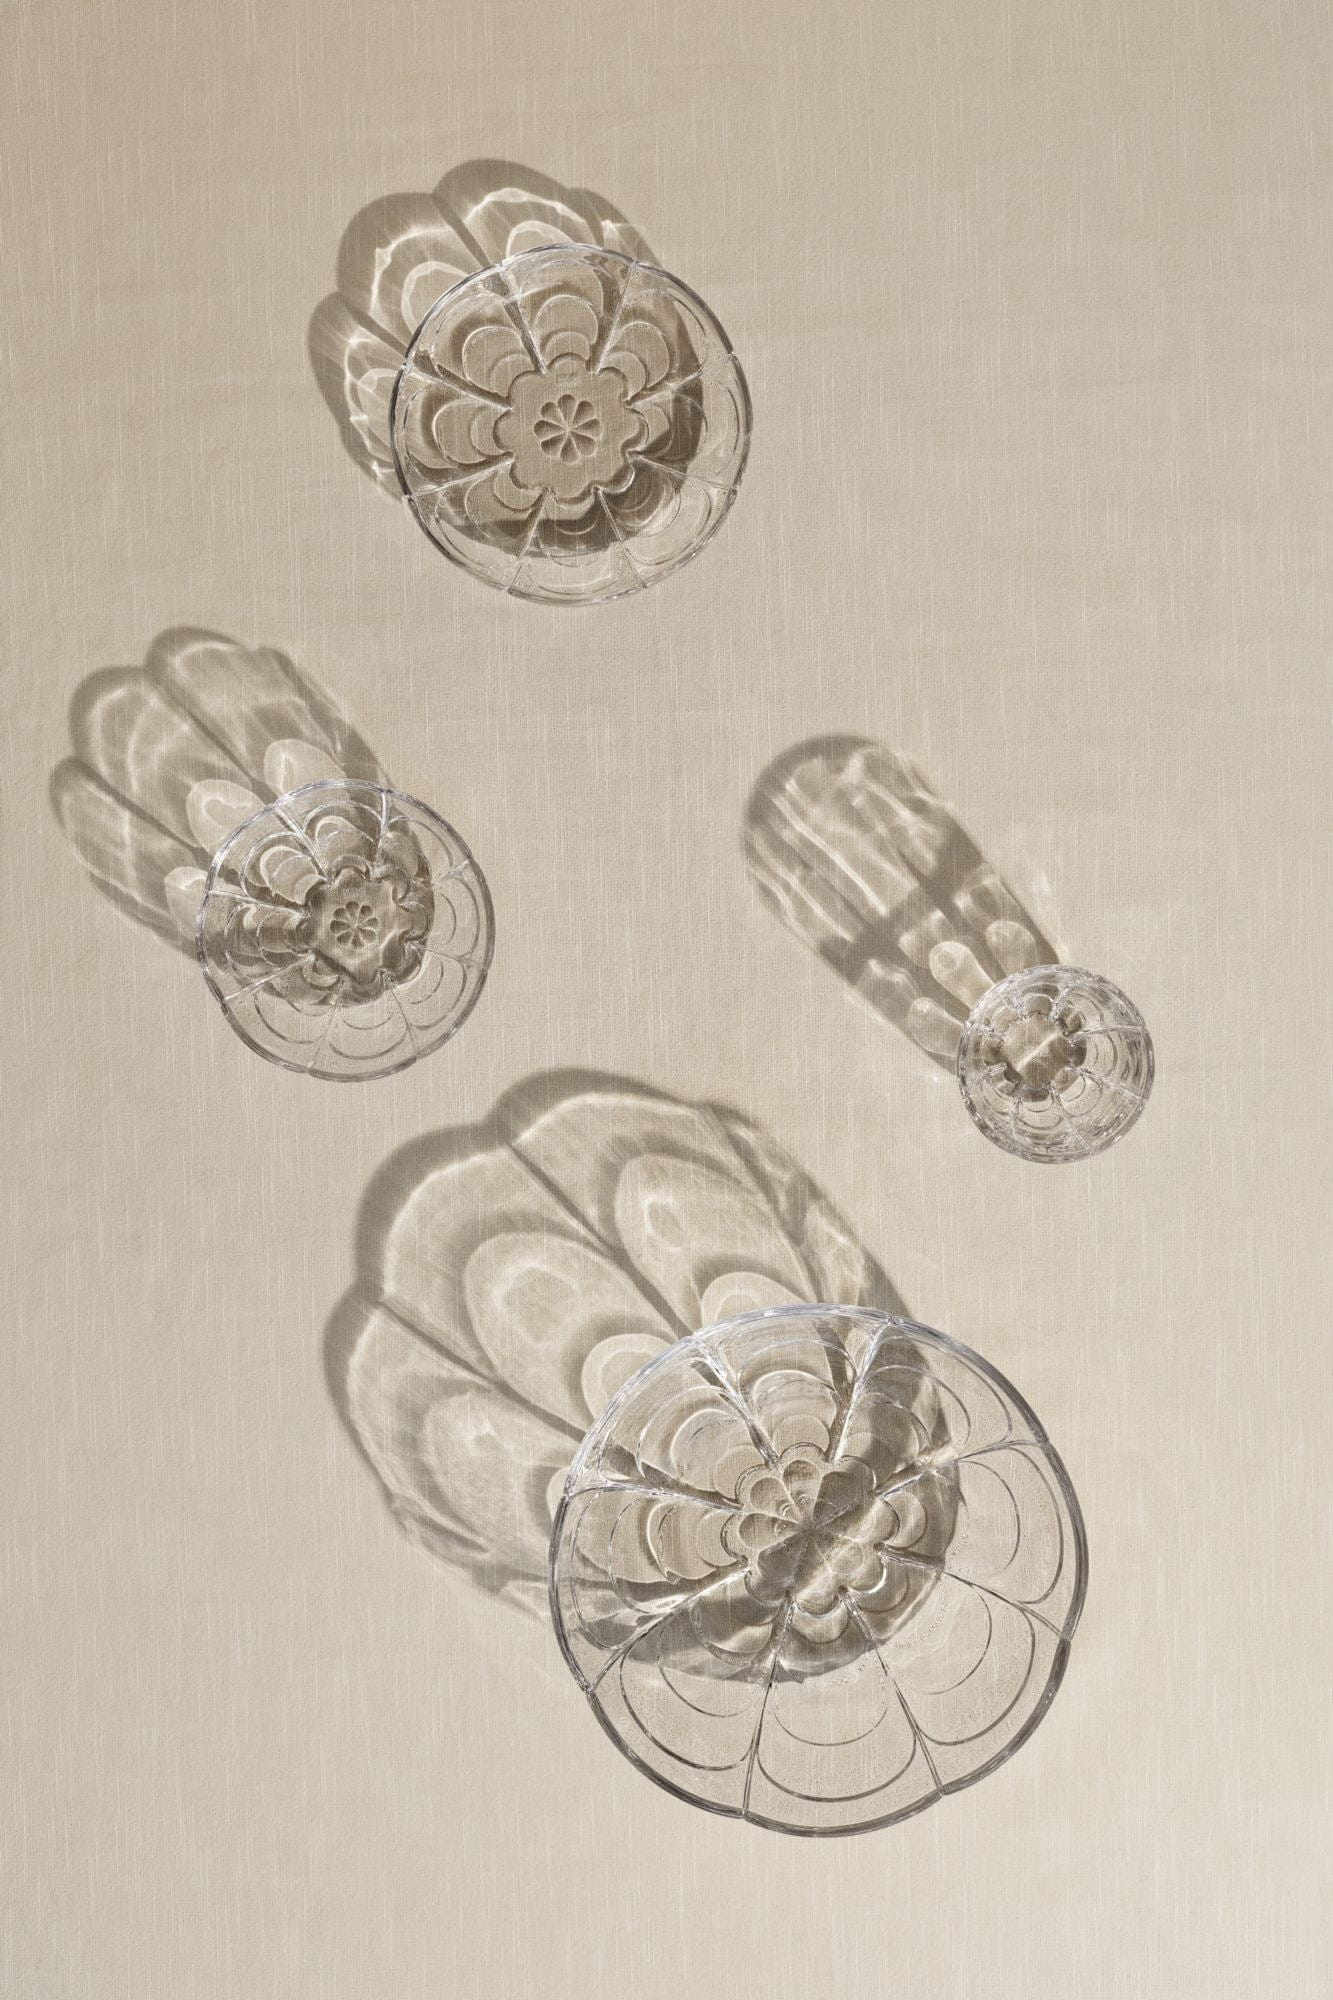 Holmegaard Lily Bowl -set van 2 Ø13 cm, helder